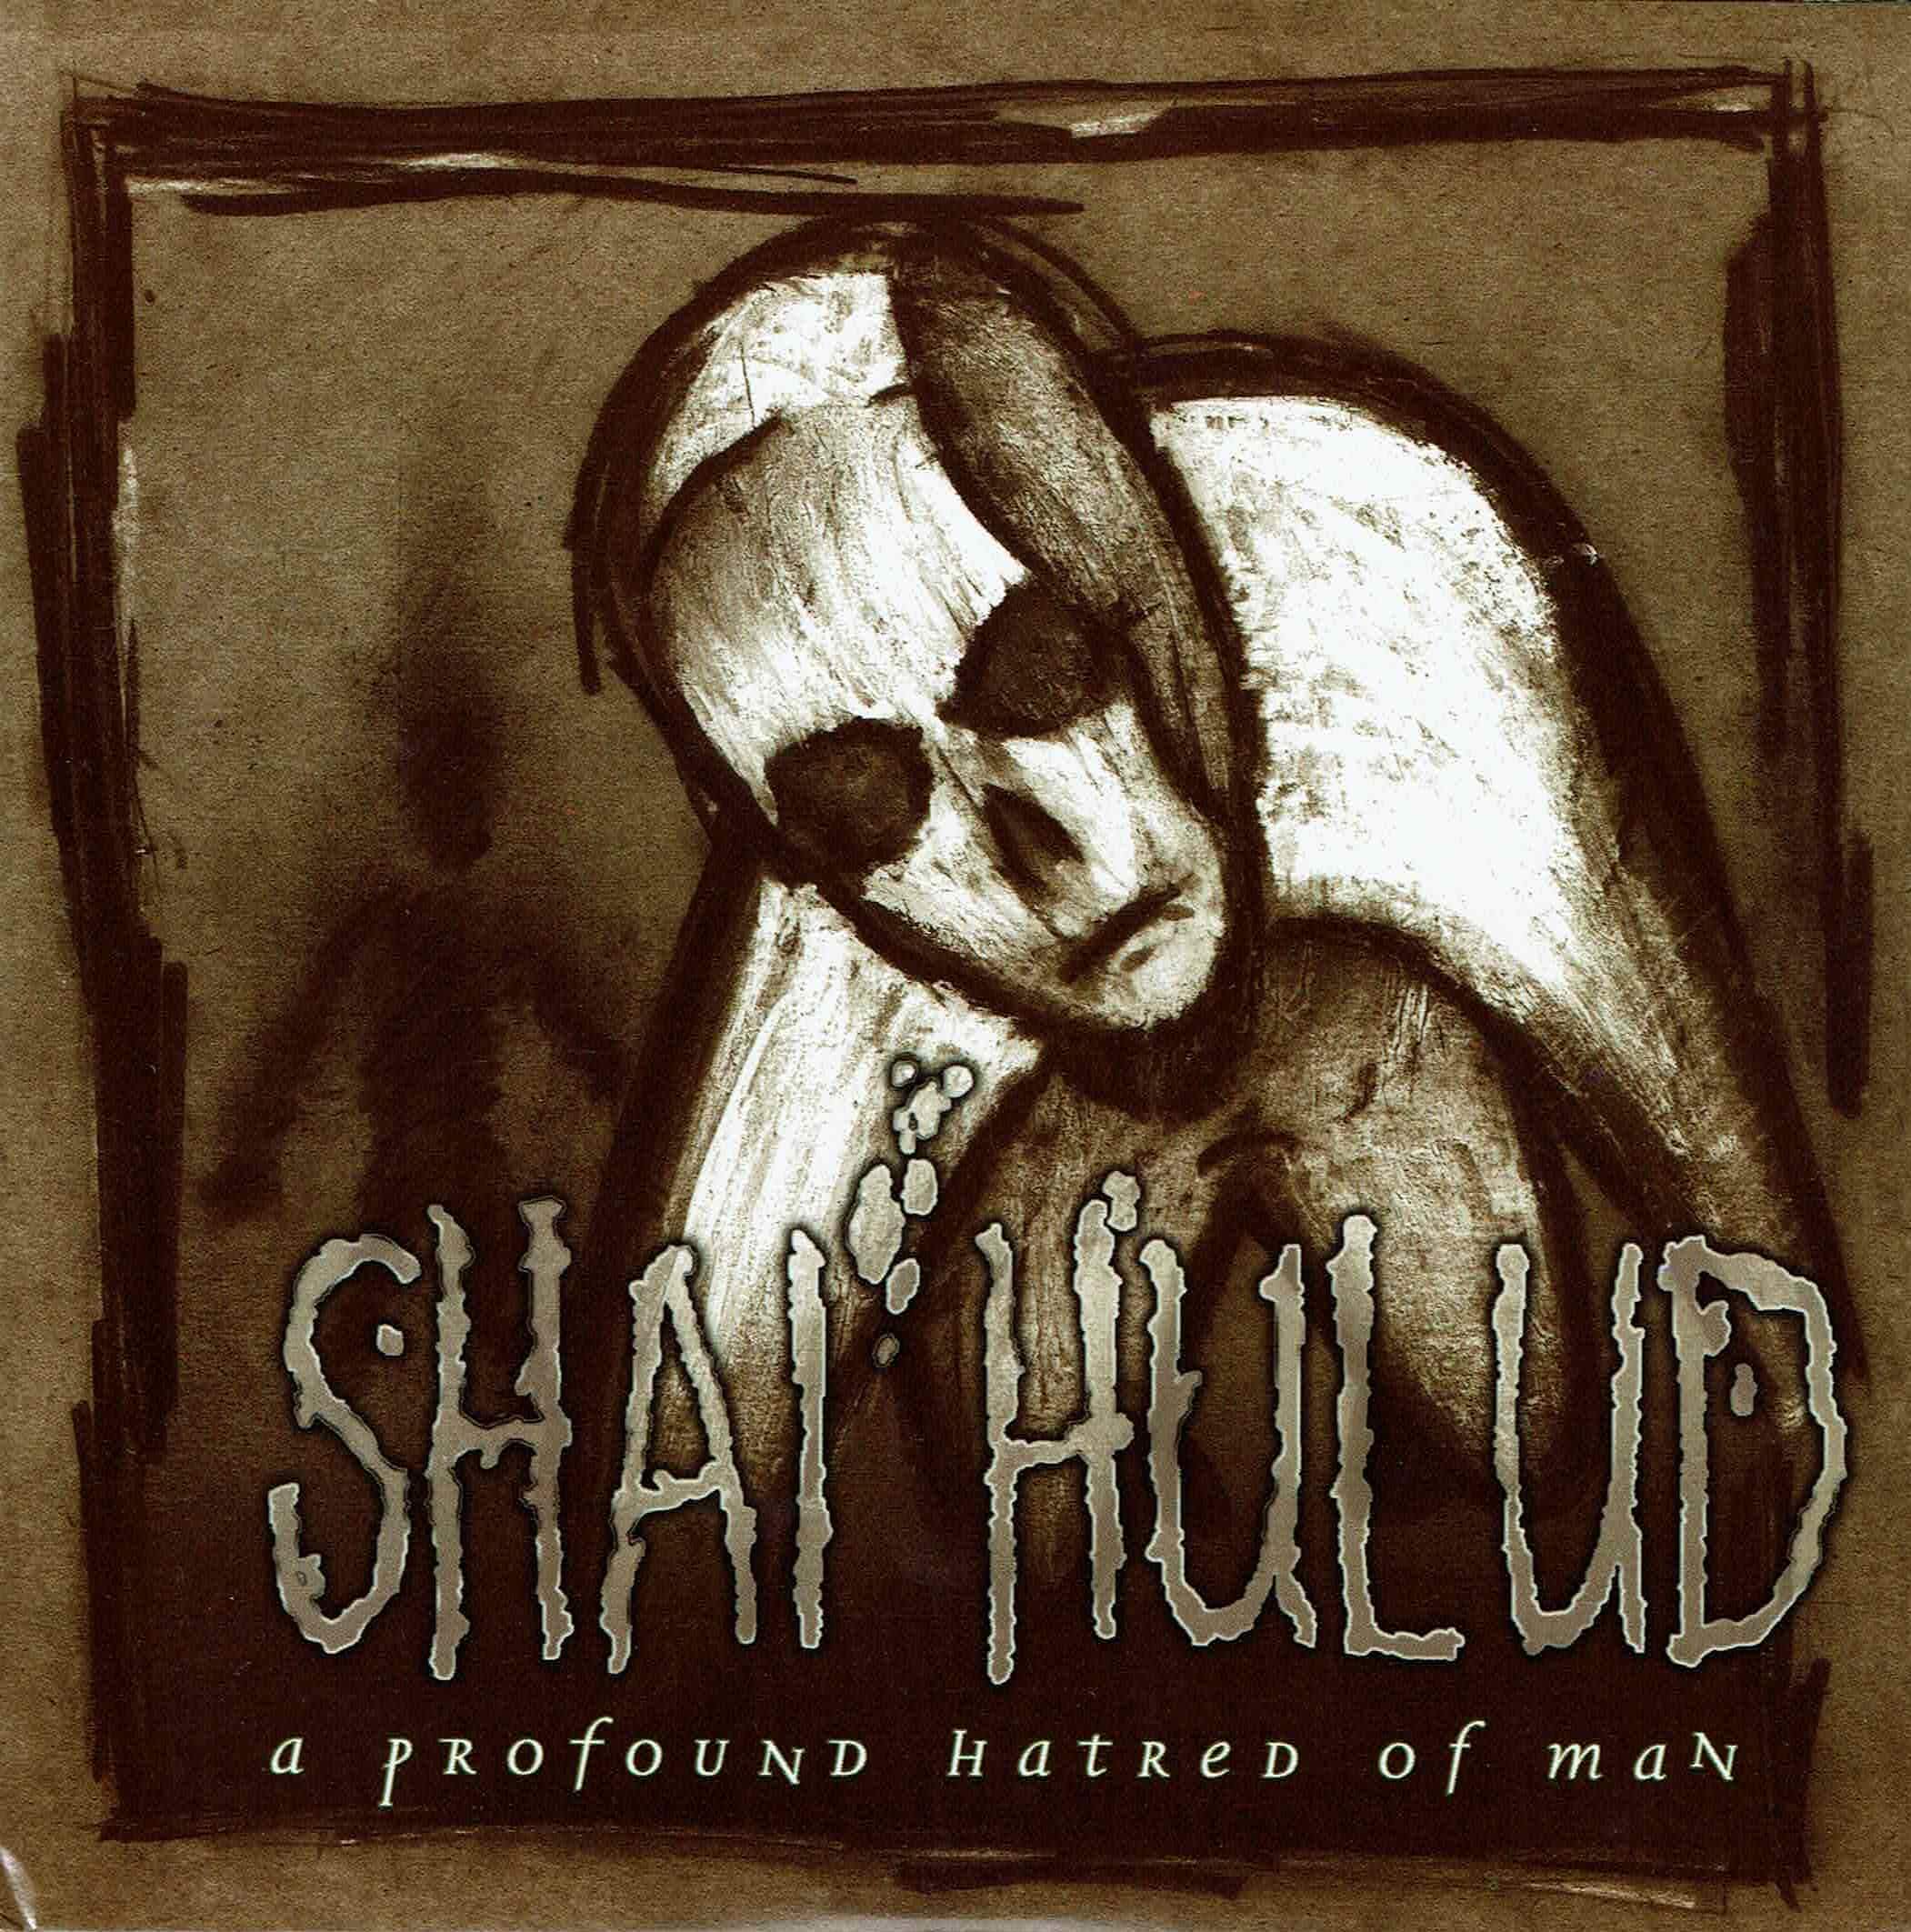 Shai Hulud a profound hatred of man